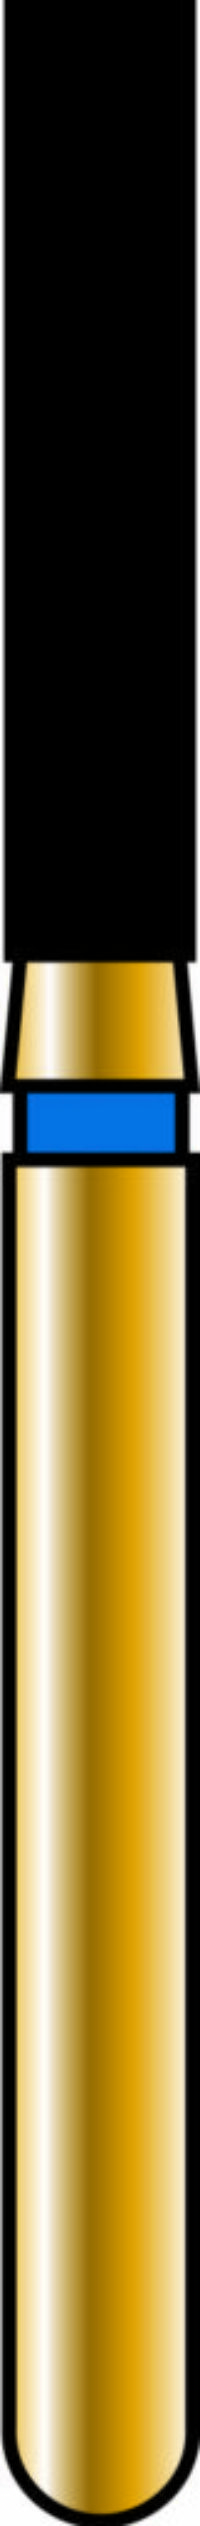 Flat End Cylinder 16-8mm Gold Diamond Bur